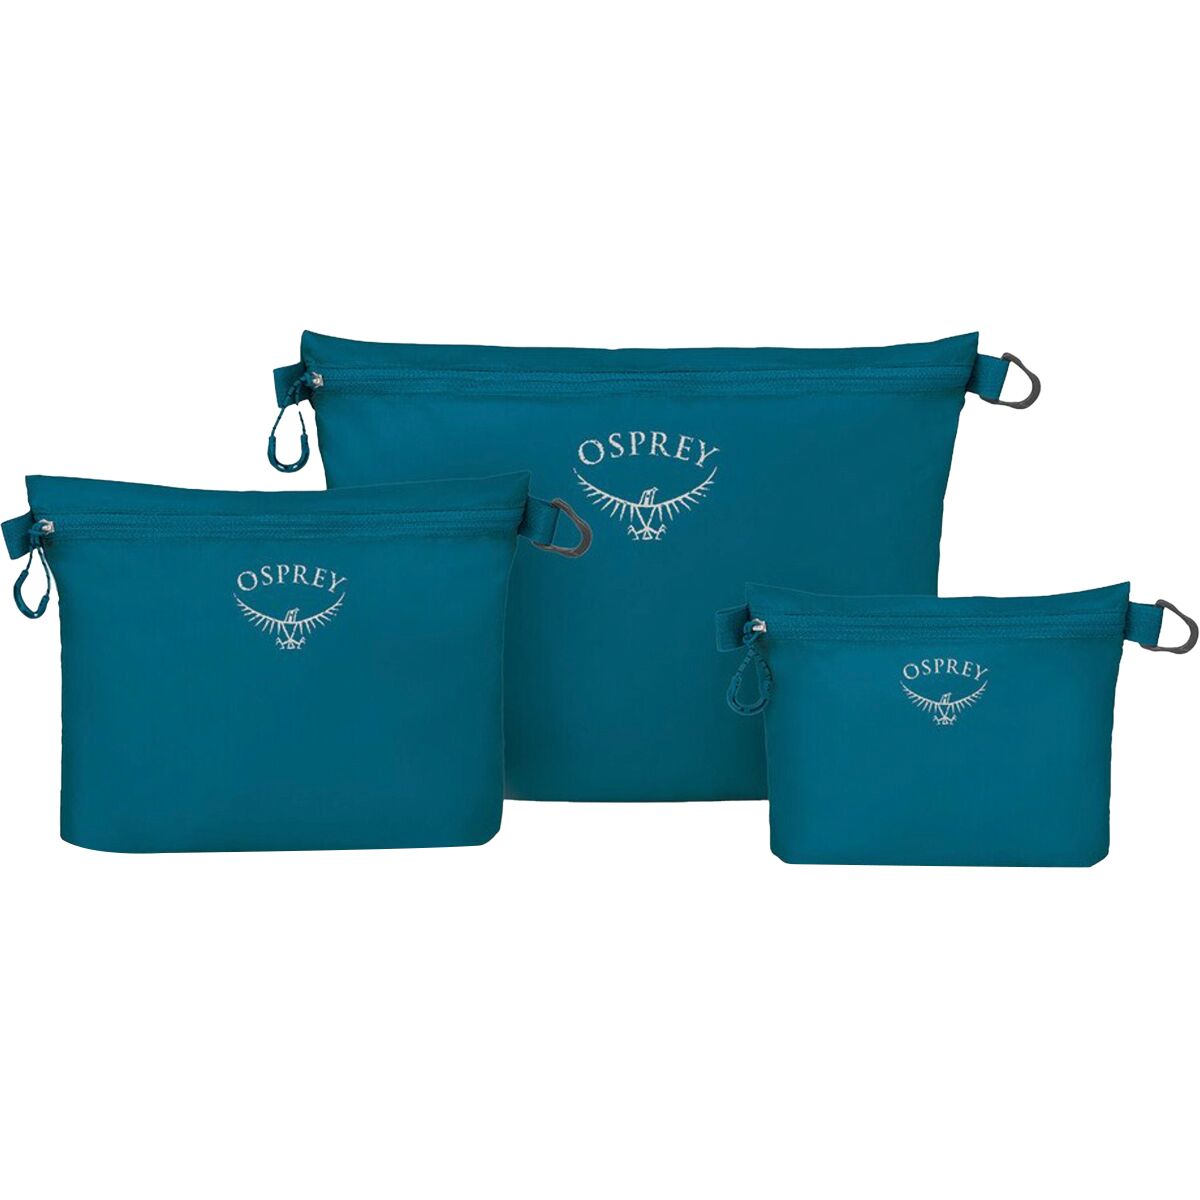 Osprey Packs Zipper Sack Set